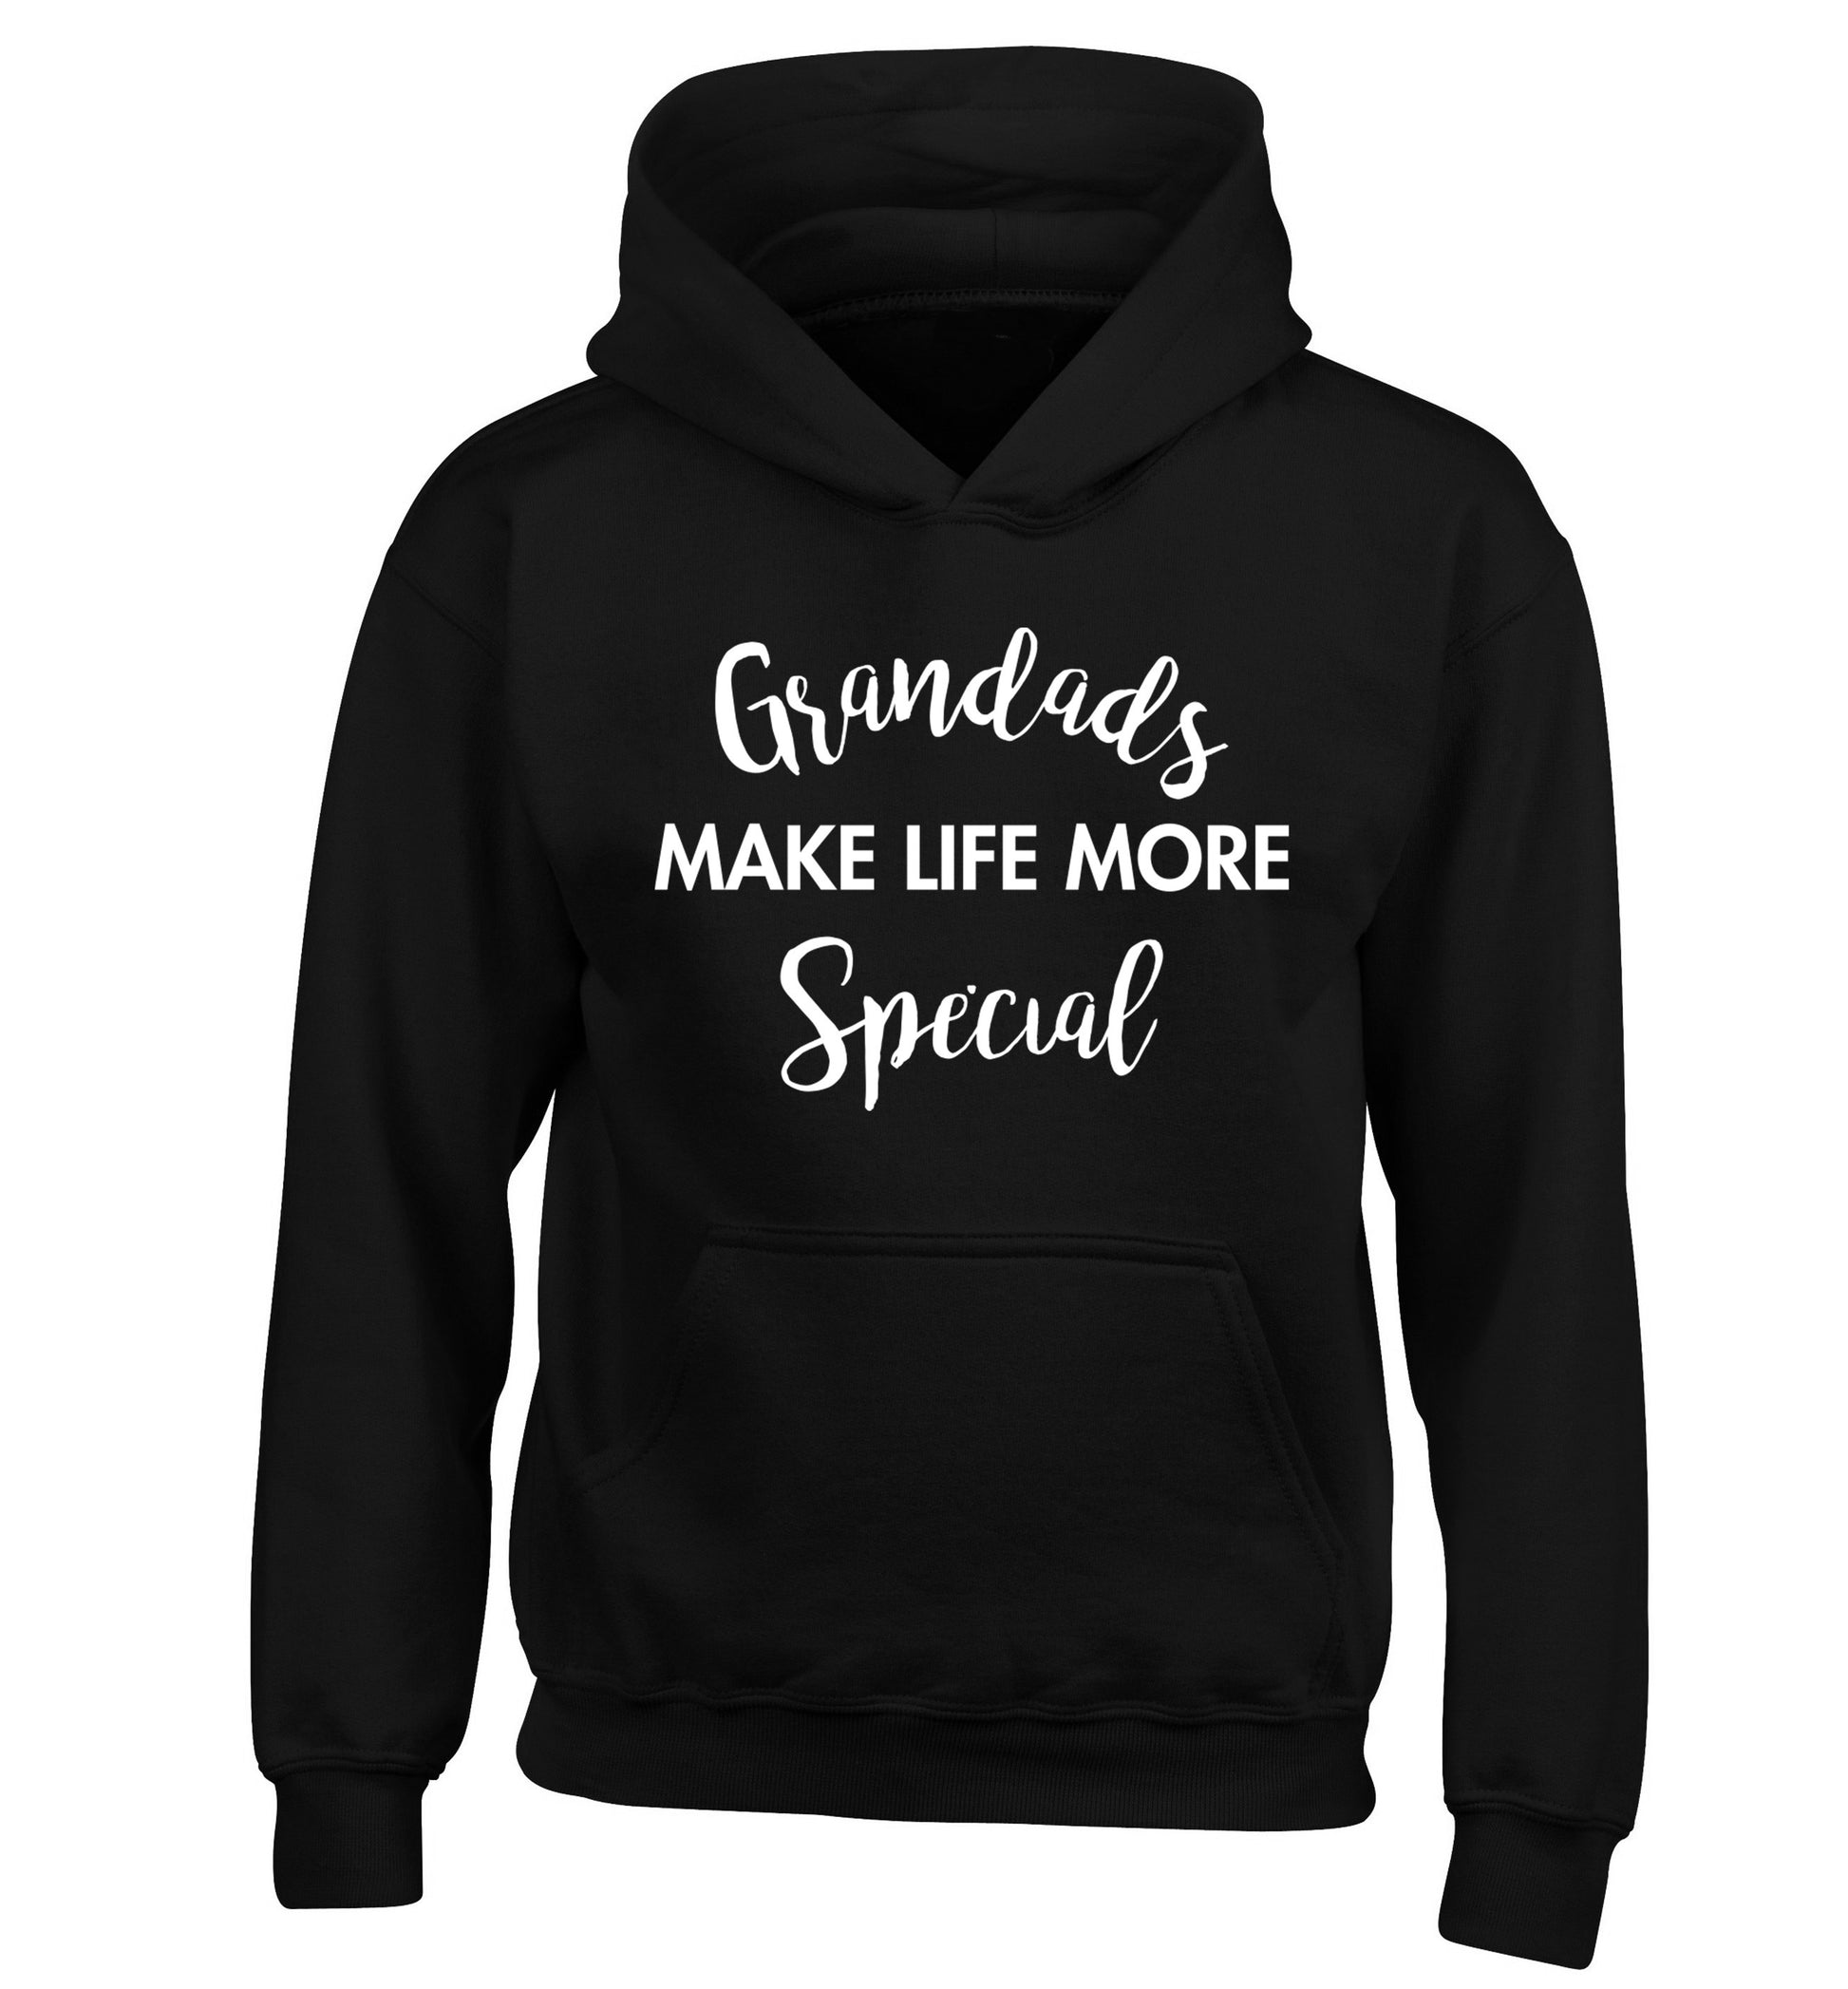 Grandads make life more special children's black hoodie 12-14 Years